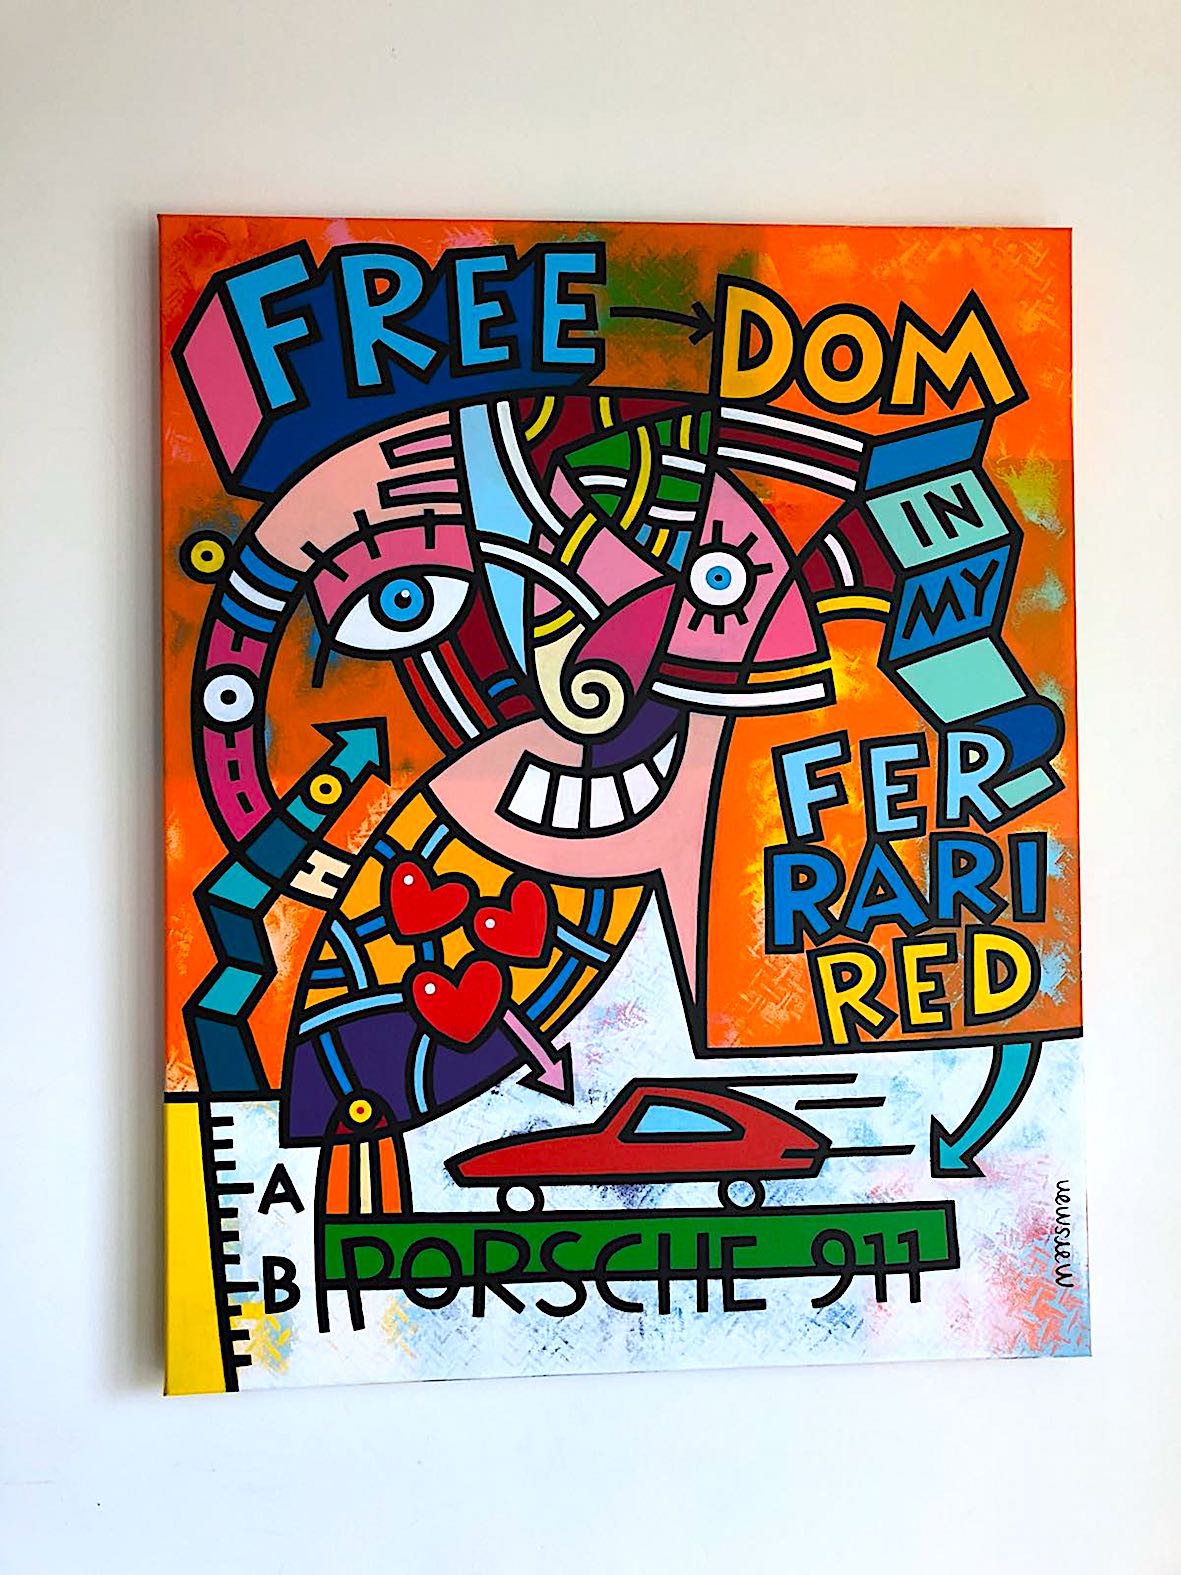 <b>FERRARI-RED PORSCHE 911</b> - 100 x 80 x 4 cm - acrylic on canvas - SOLD  <a style="color: red; text-decoration: none" href="mailto:jpgpmarsman@onsbrabantnet.nl">BESTEL</a>